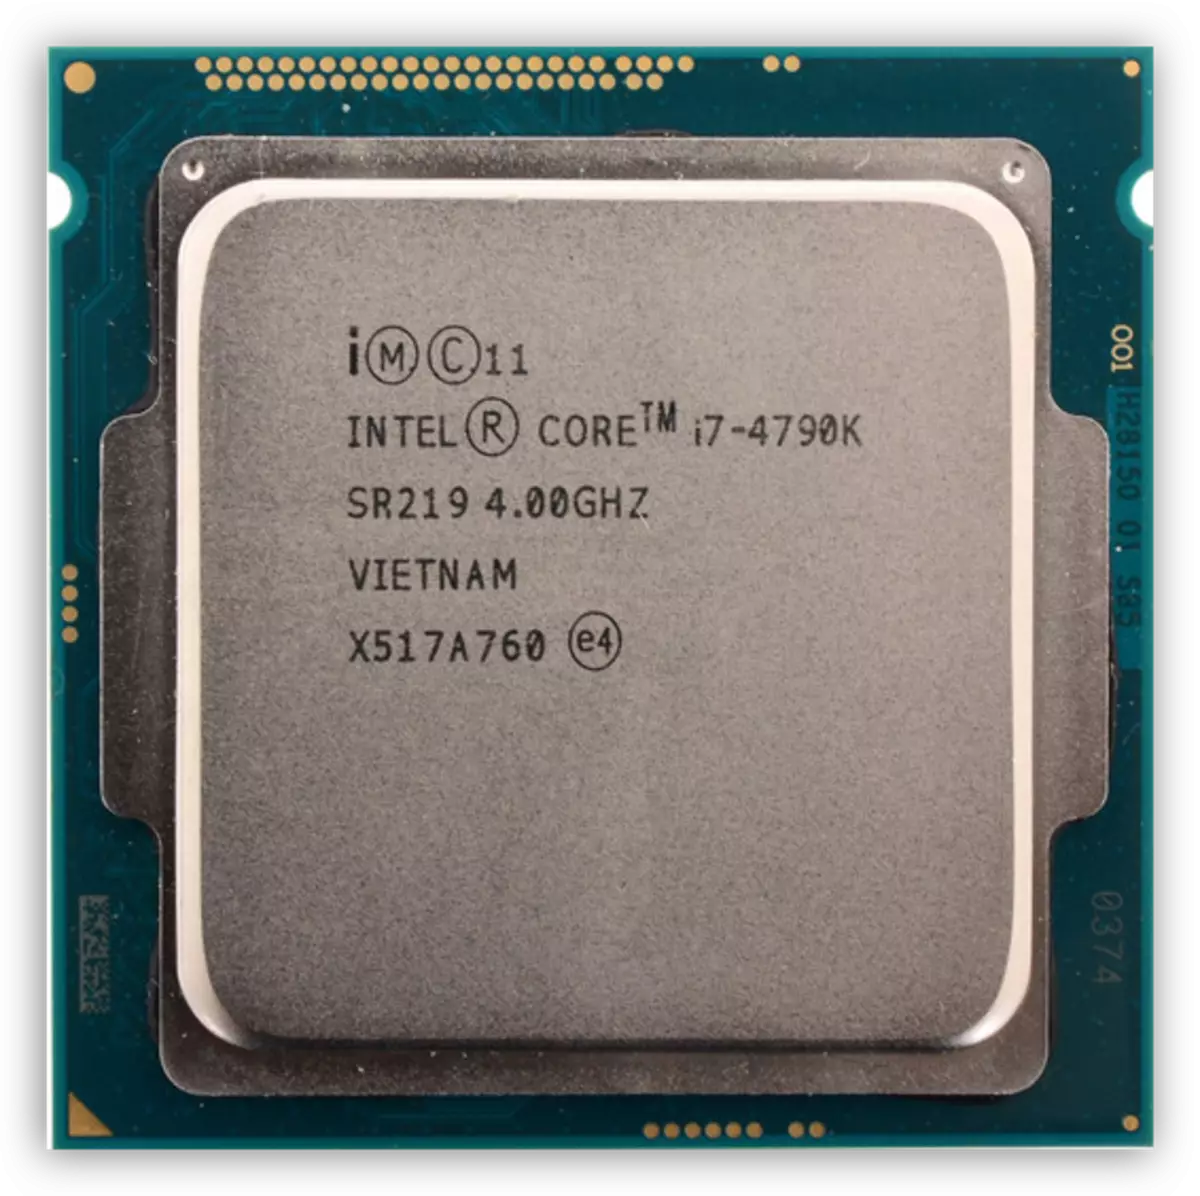 Core i7-4790k-procesoro pri Haswell-arkitekturo